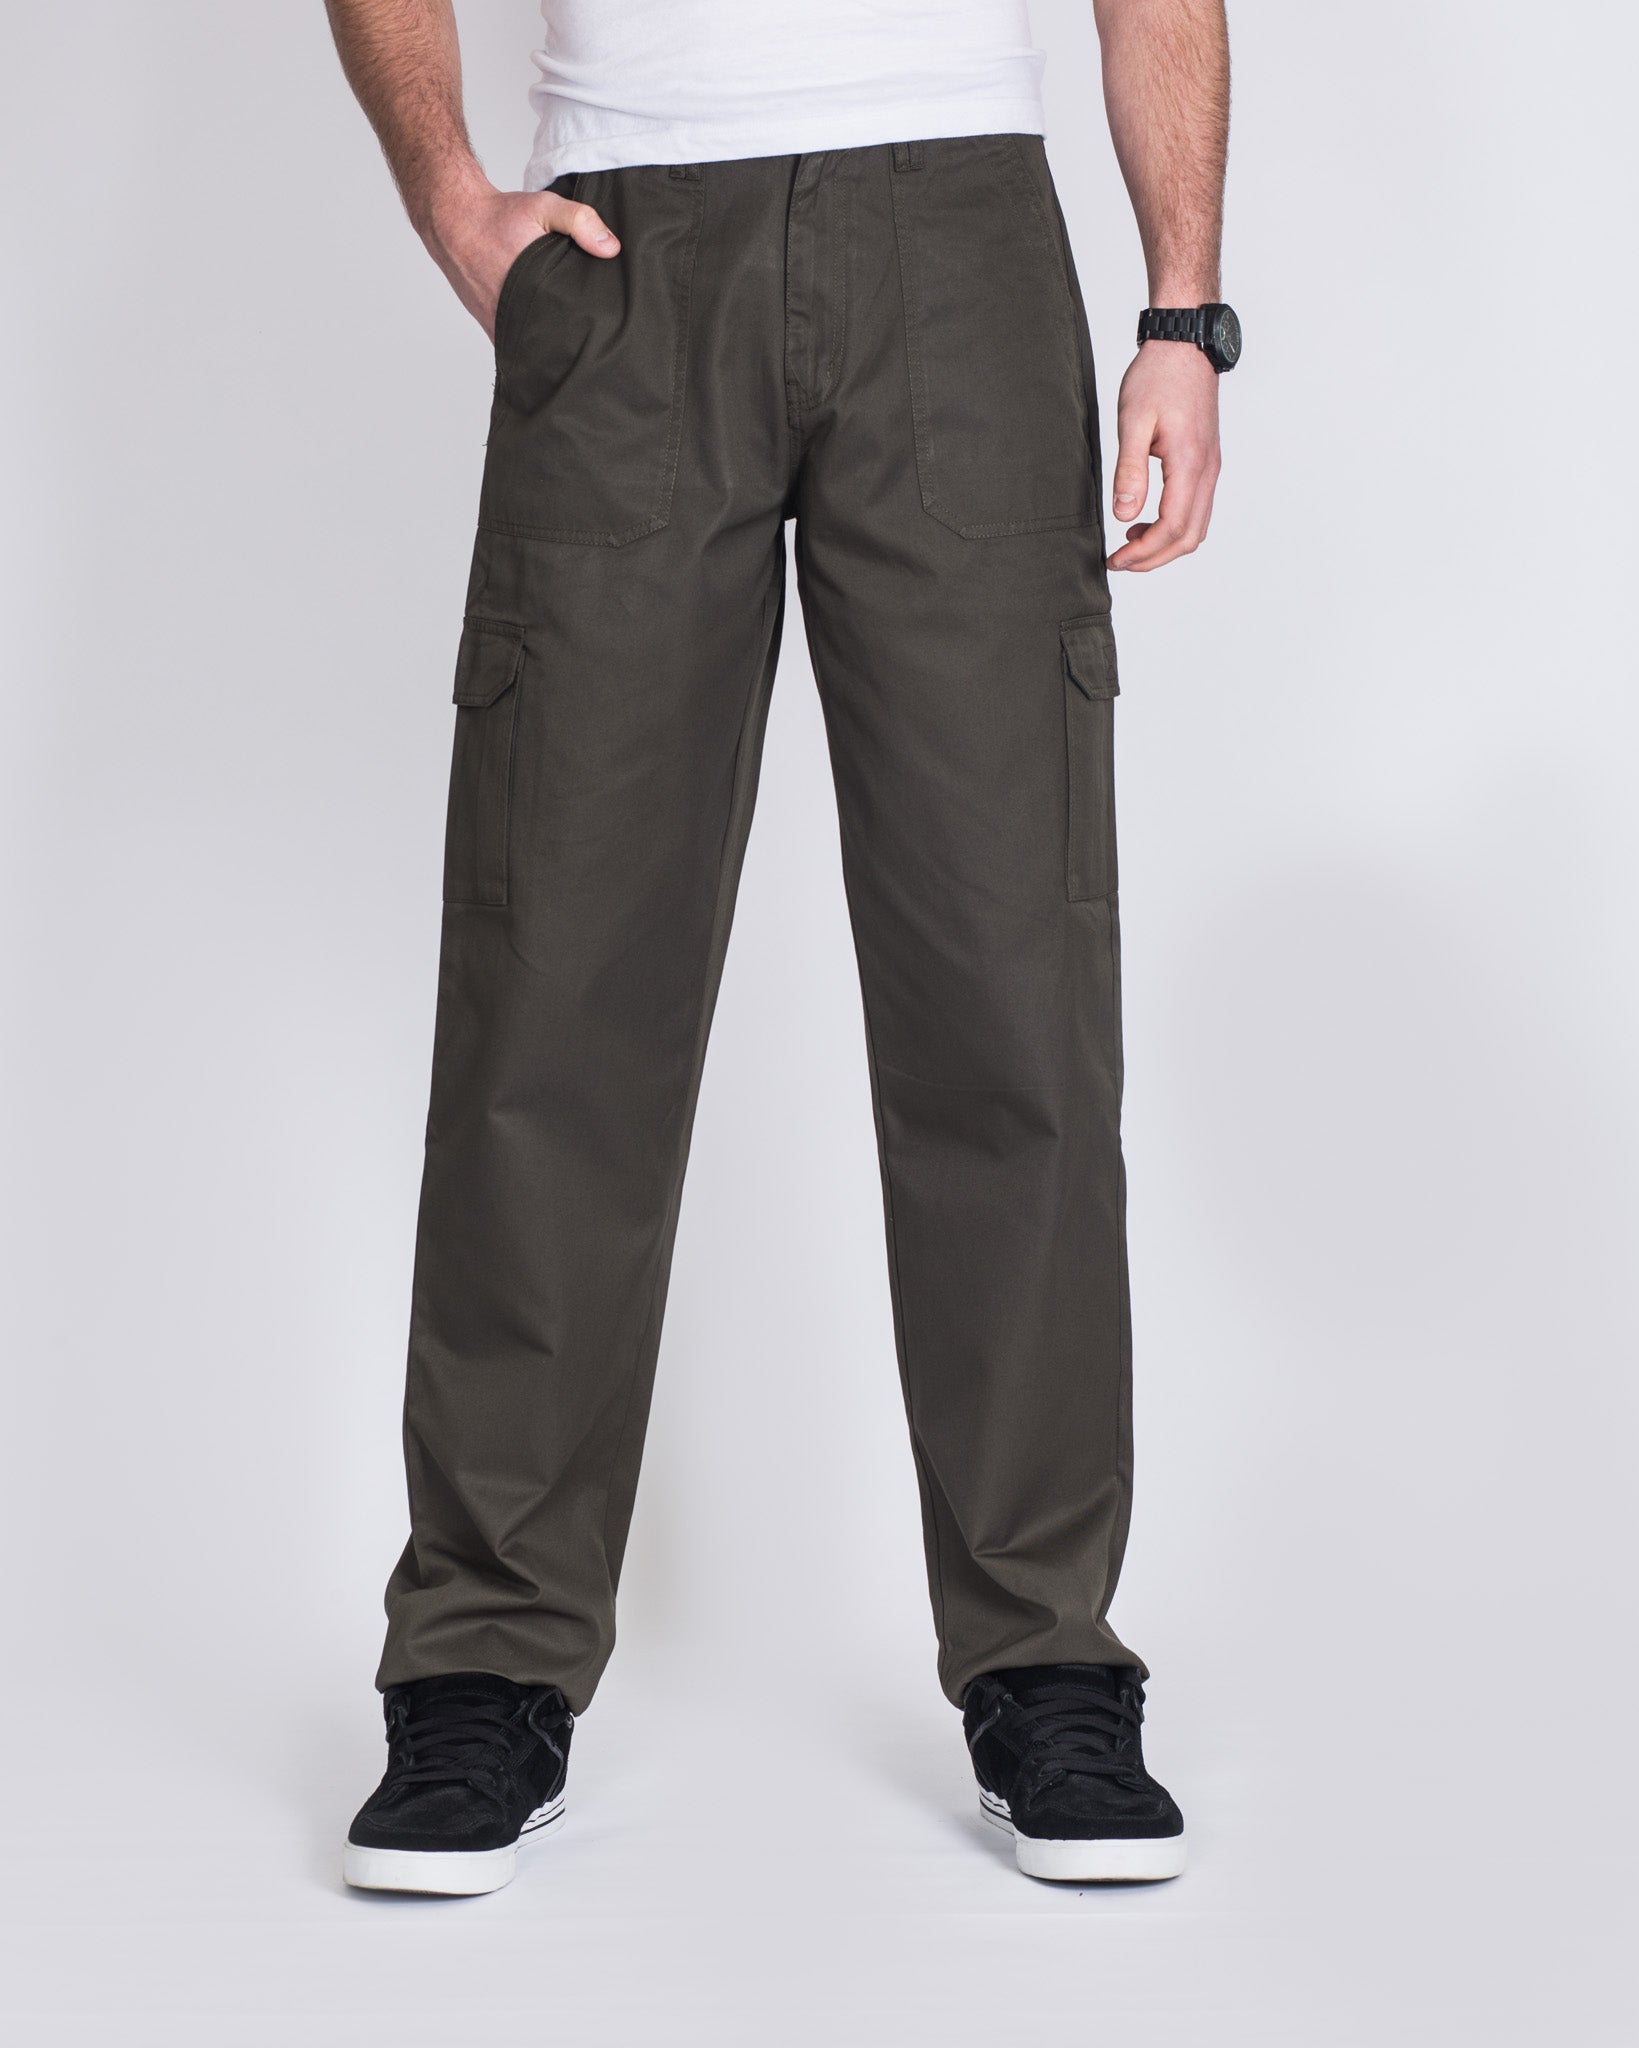 Ed Baxter Heavy Duty Tall Combat Trousers (khaki)